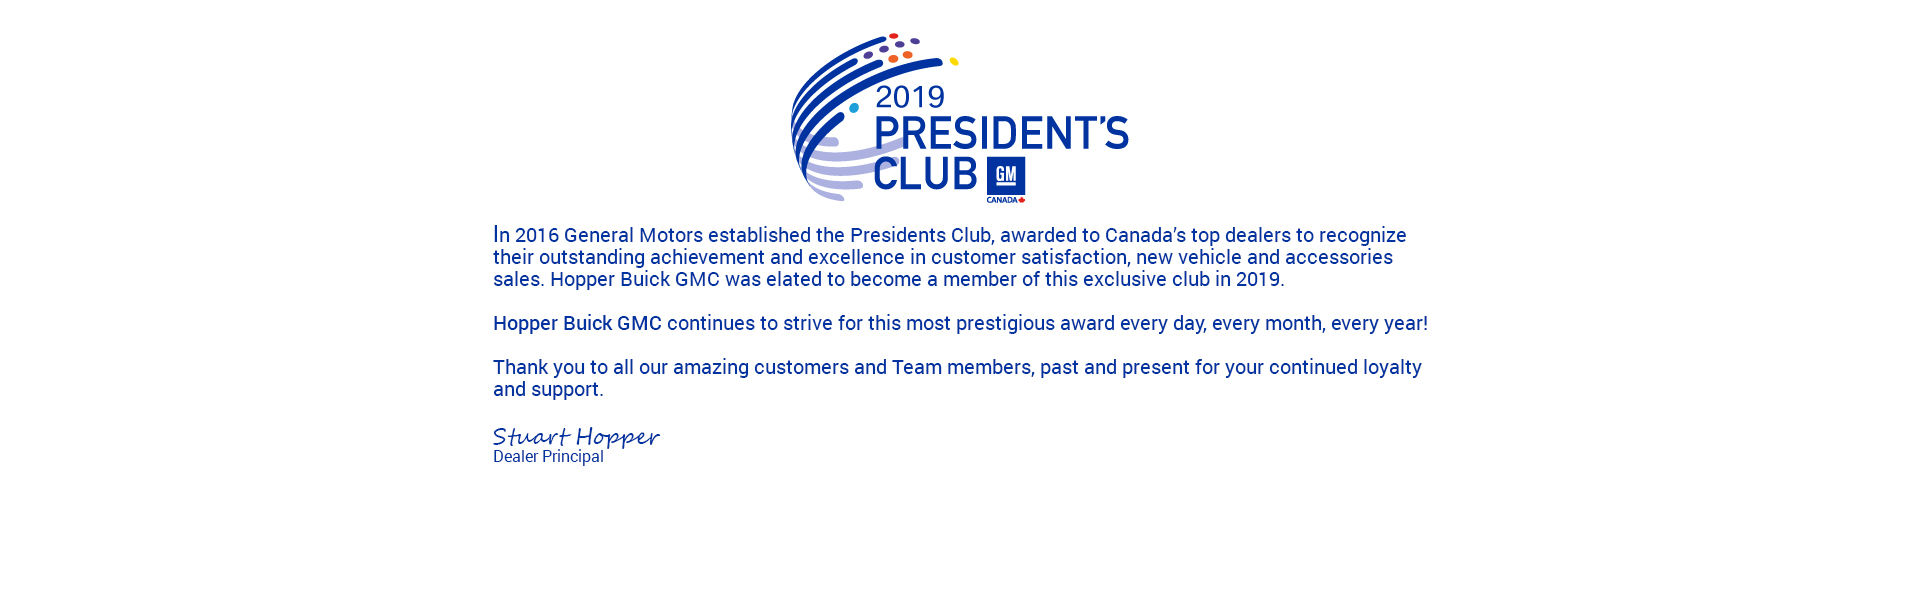 2019 President's Club